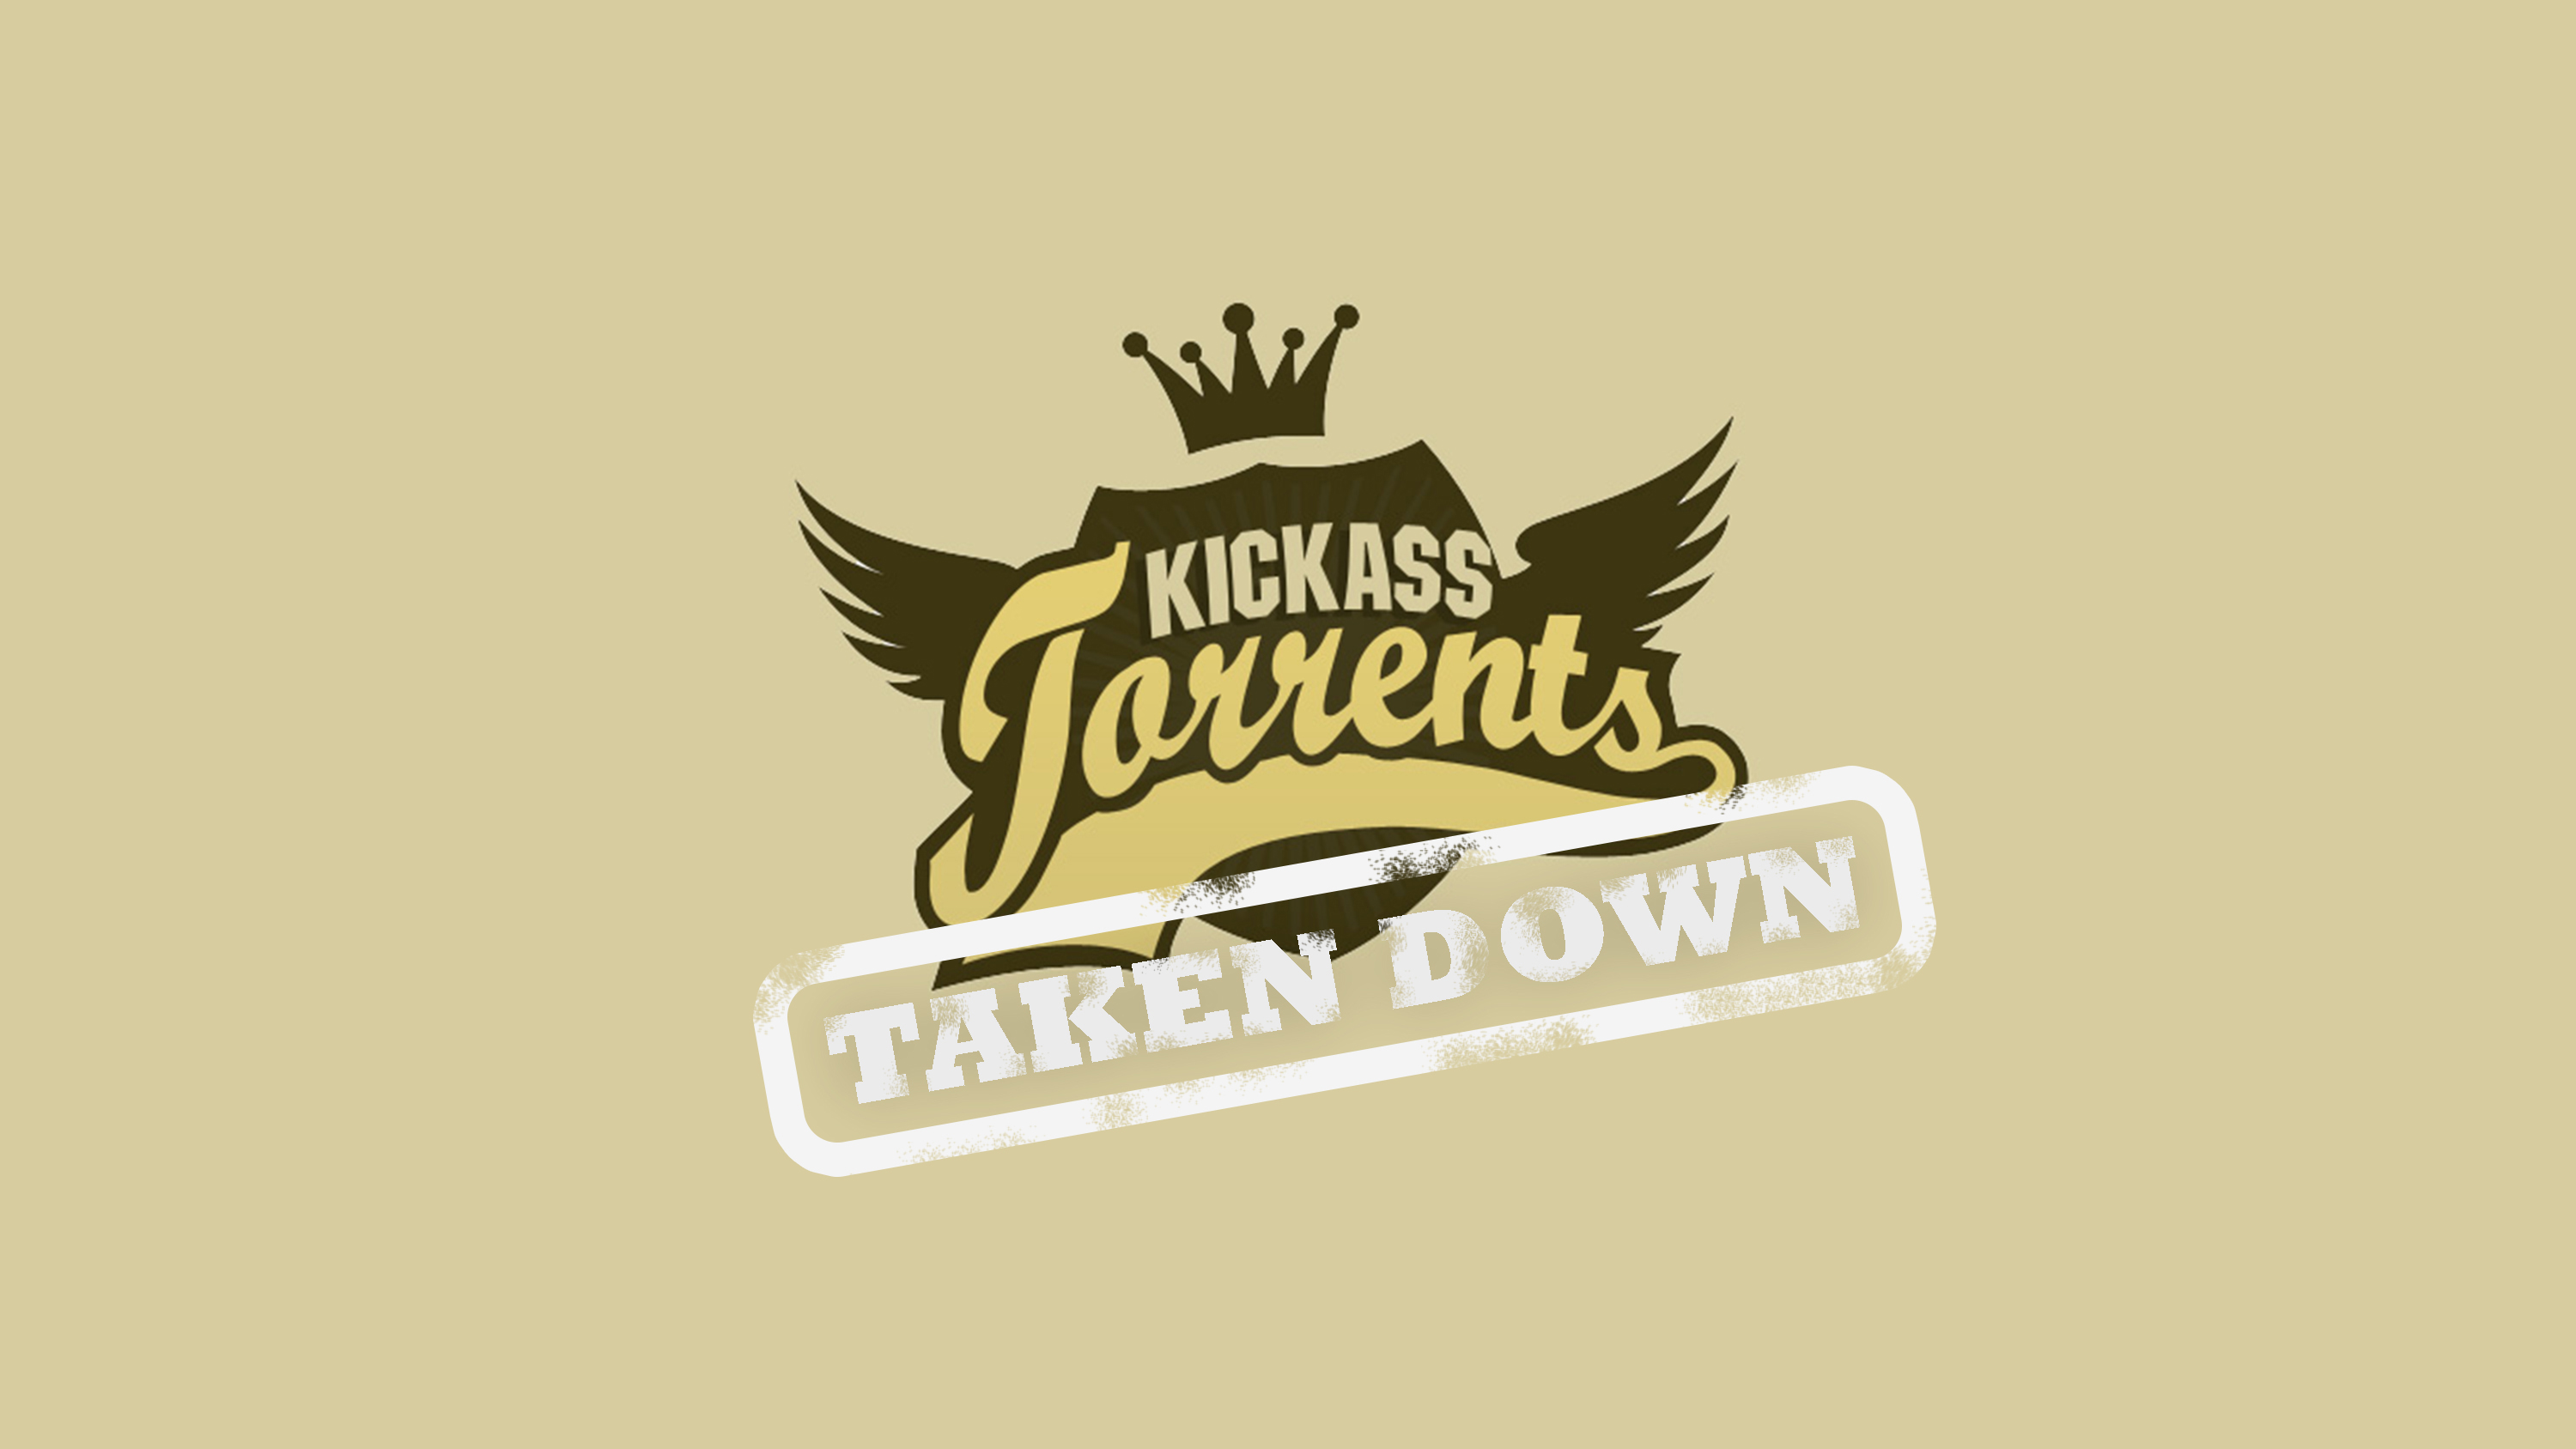 160721125846-kickass-torrents-down.jpg